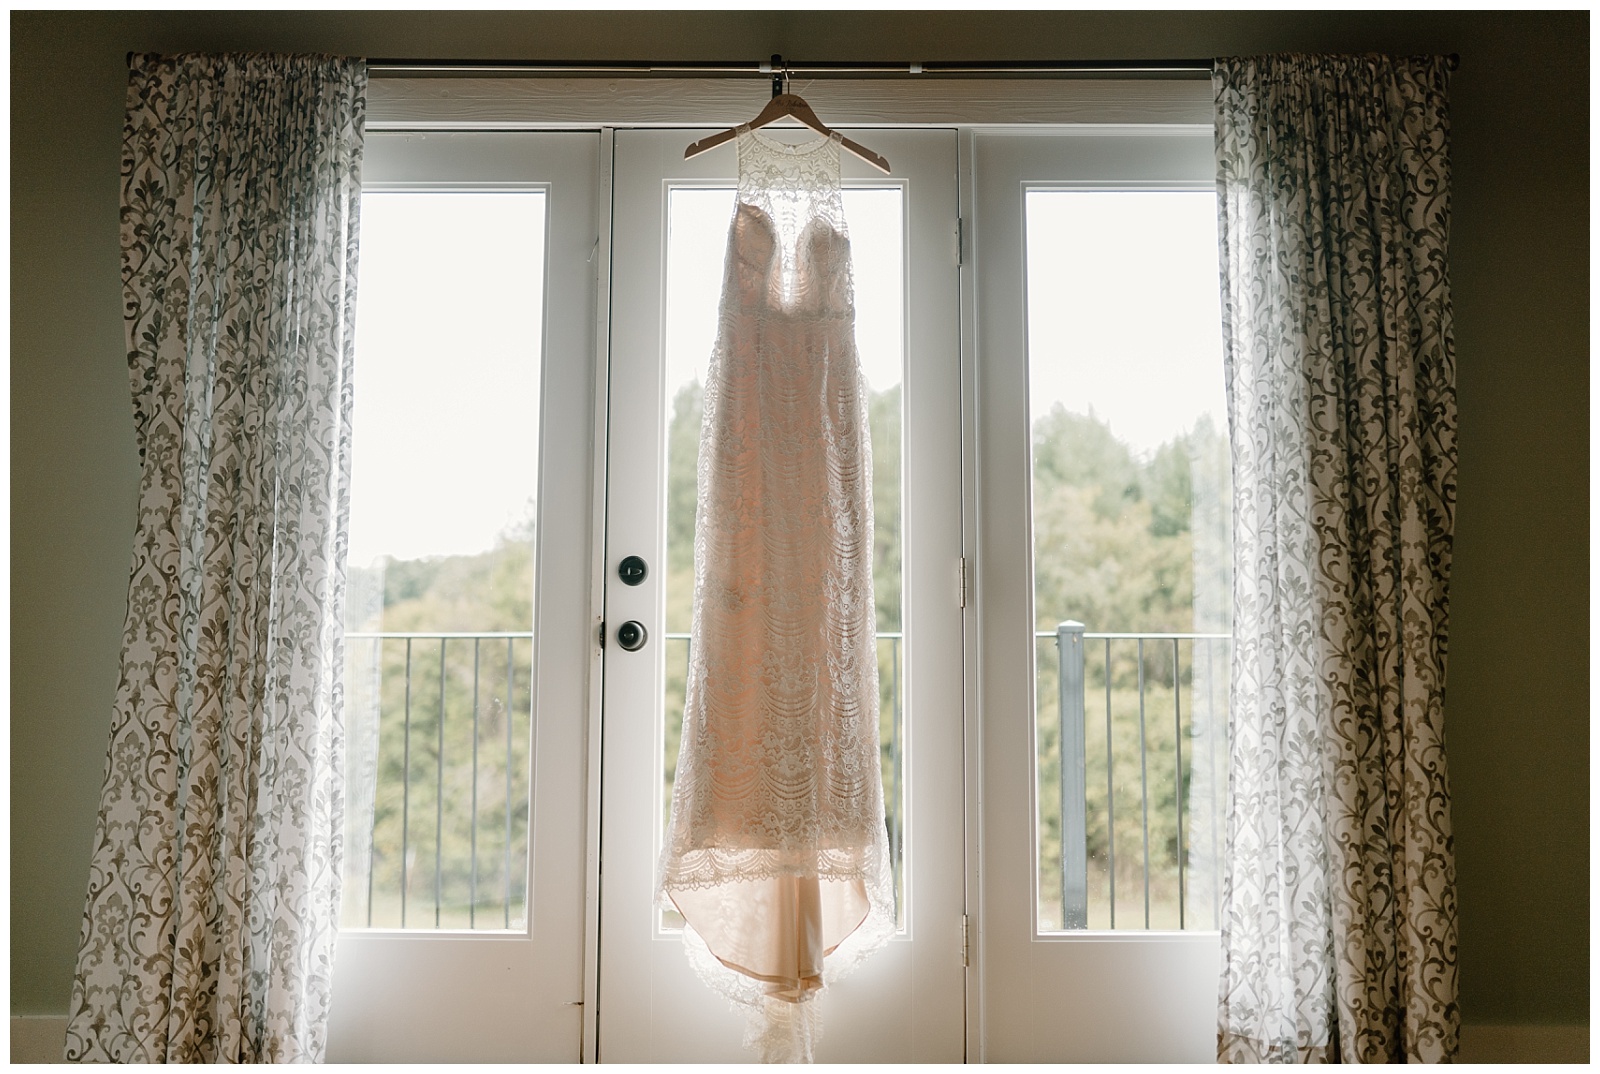 Boho cream lace sheath style wedding dress is hanging up in a three panel window.